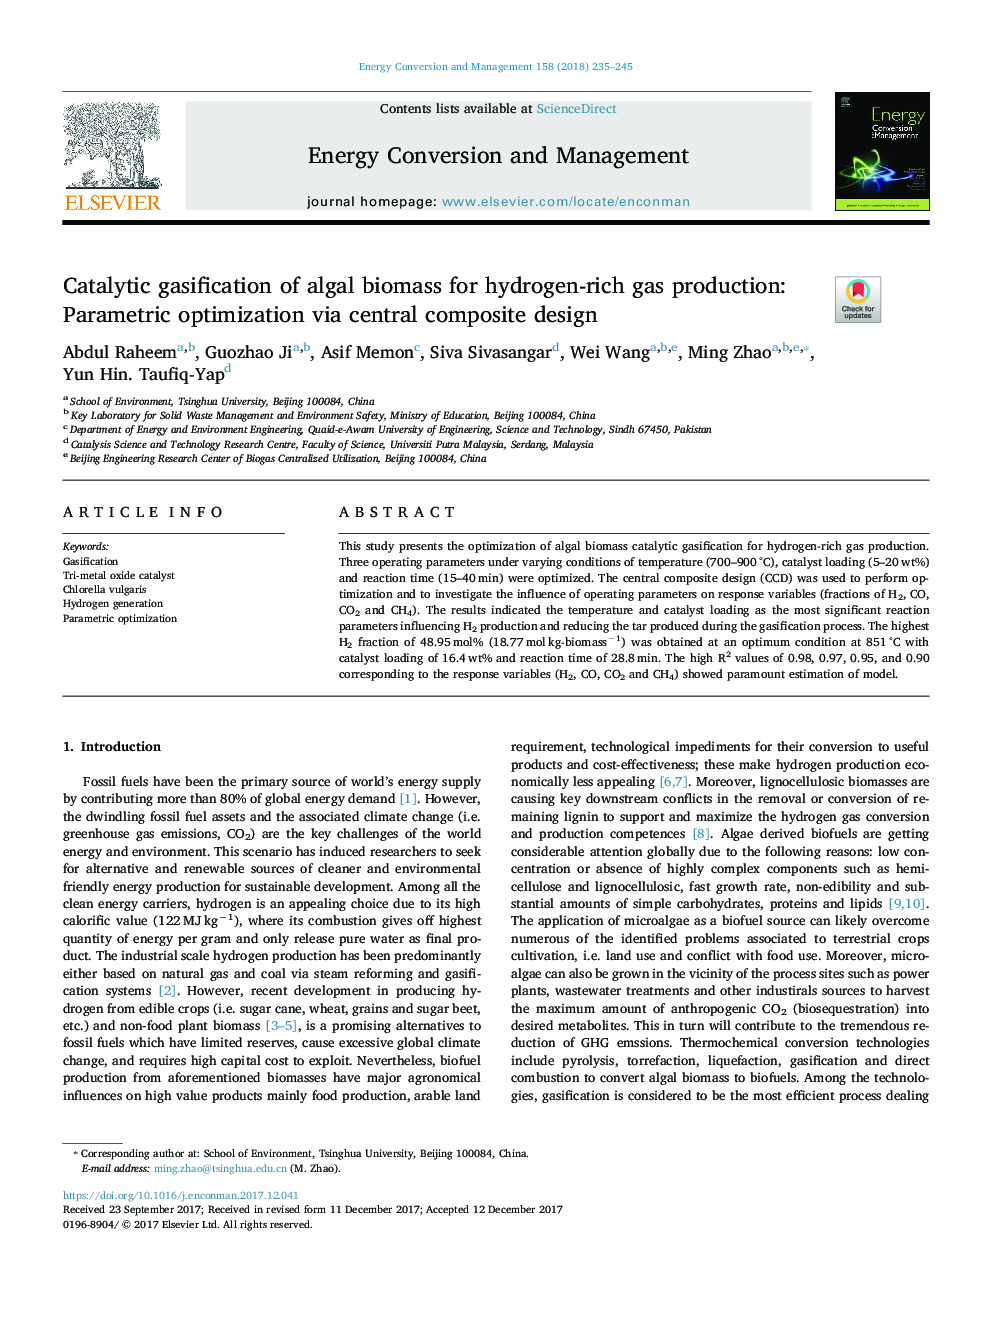 Catalytic gasification of algal biomass for hydrogen-rich gas production: Parametric optimization via central composite design